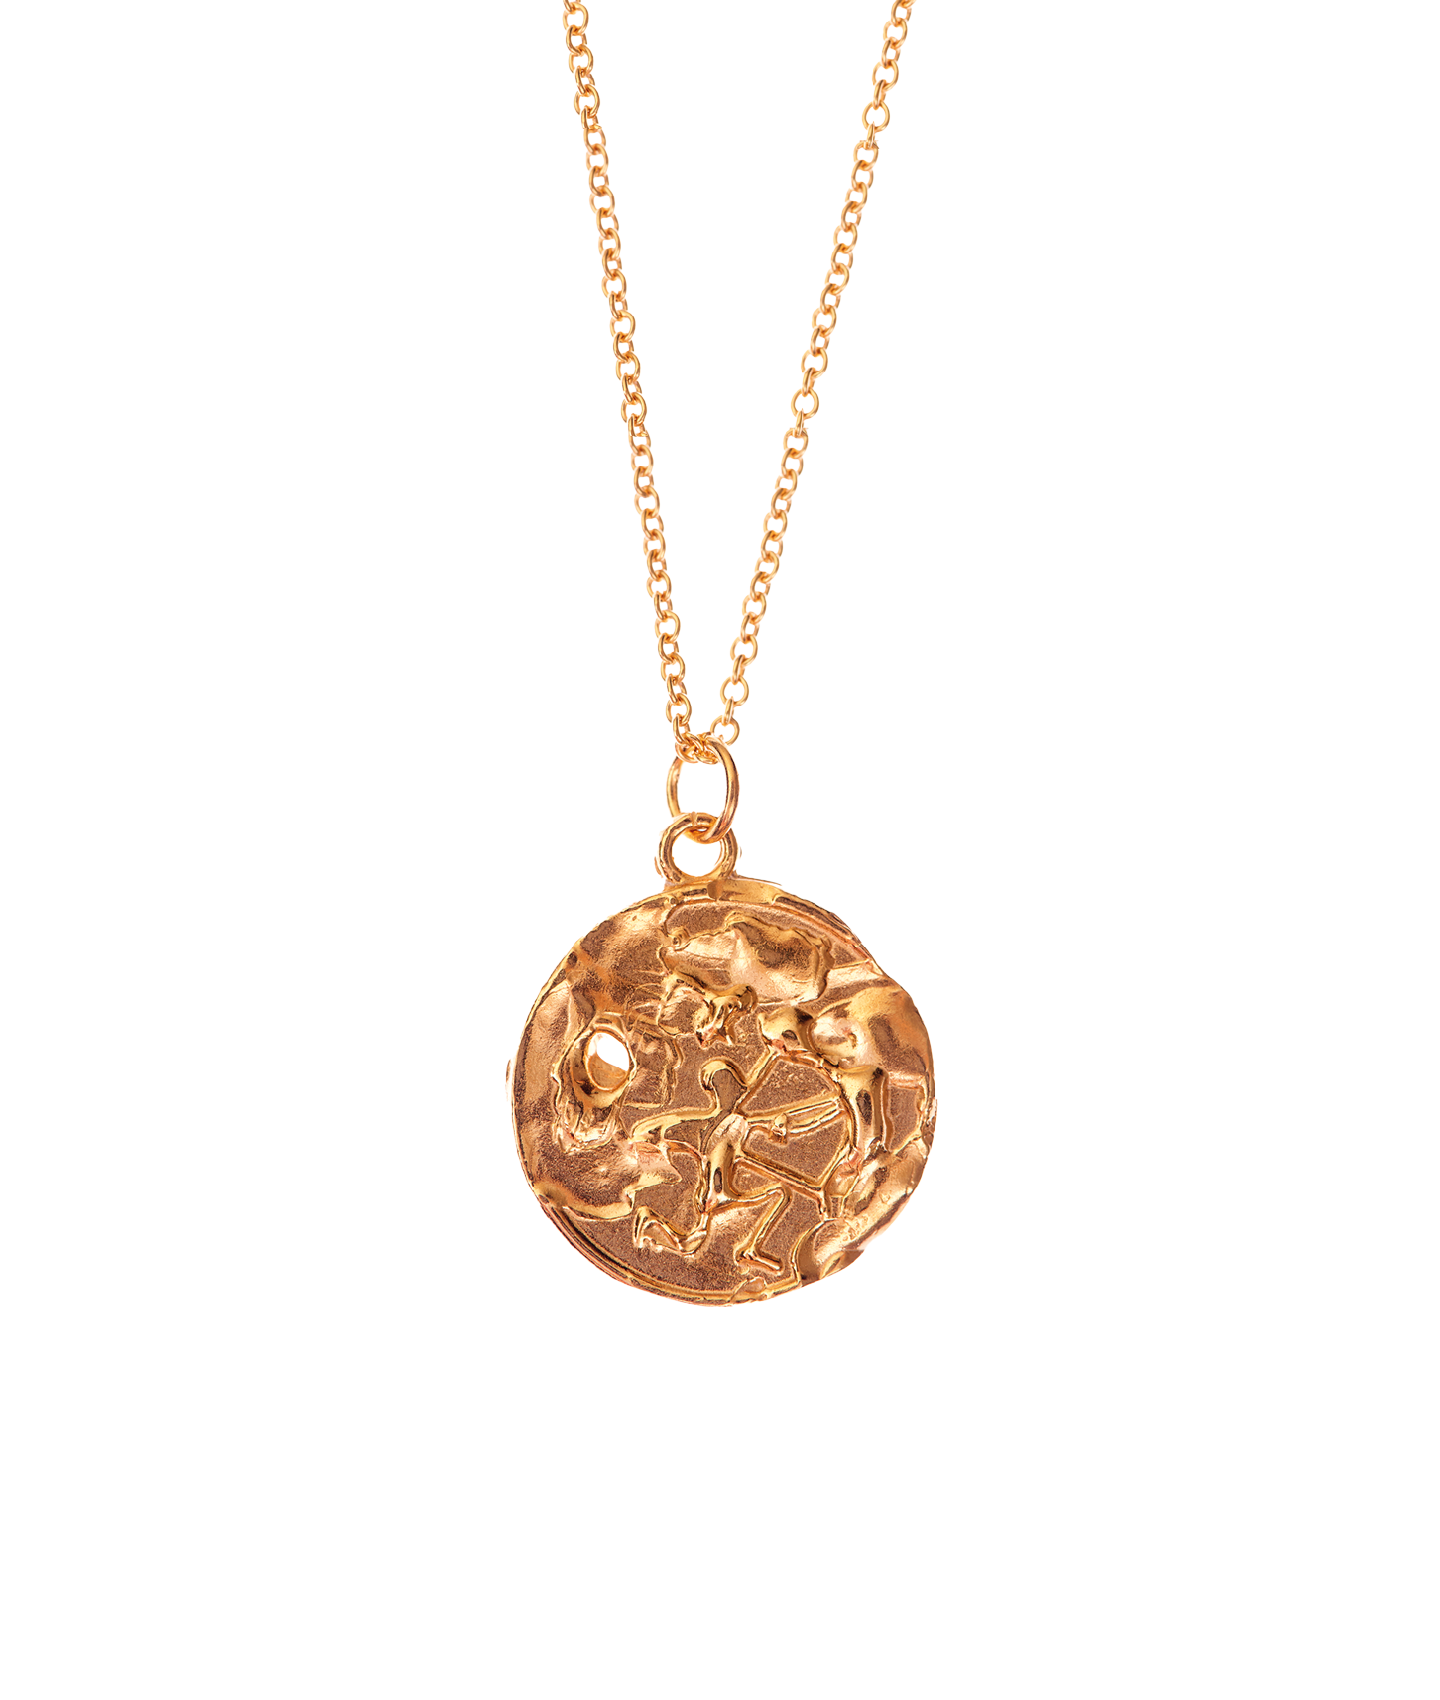 Sagittarius Zodiac Sign Pendant Necklace I1 G 0.25 Ct Round Cut Diamond 14K  Gold | eBay